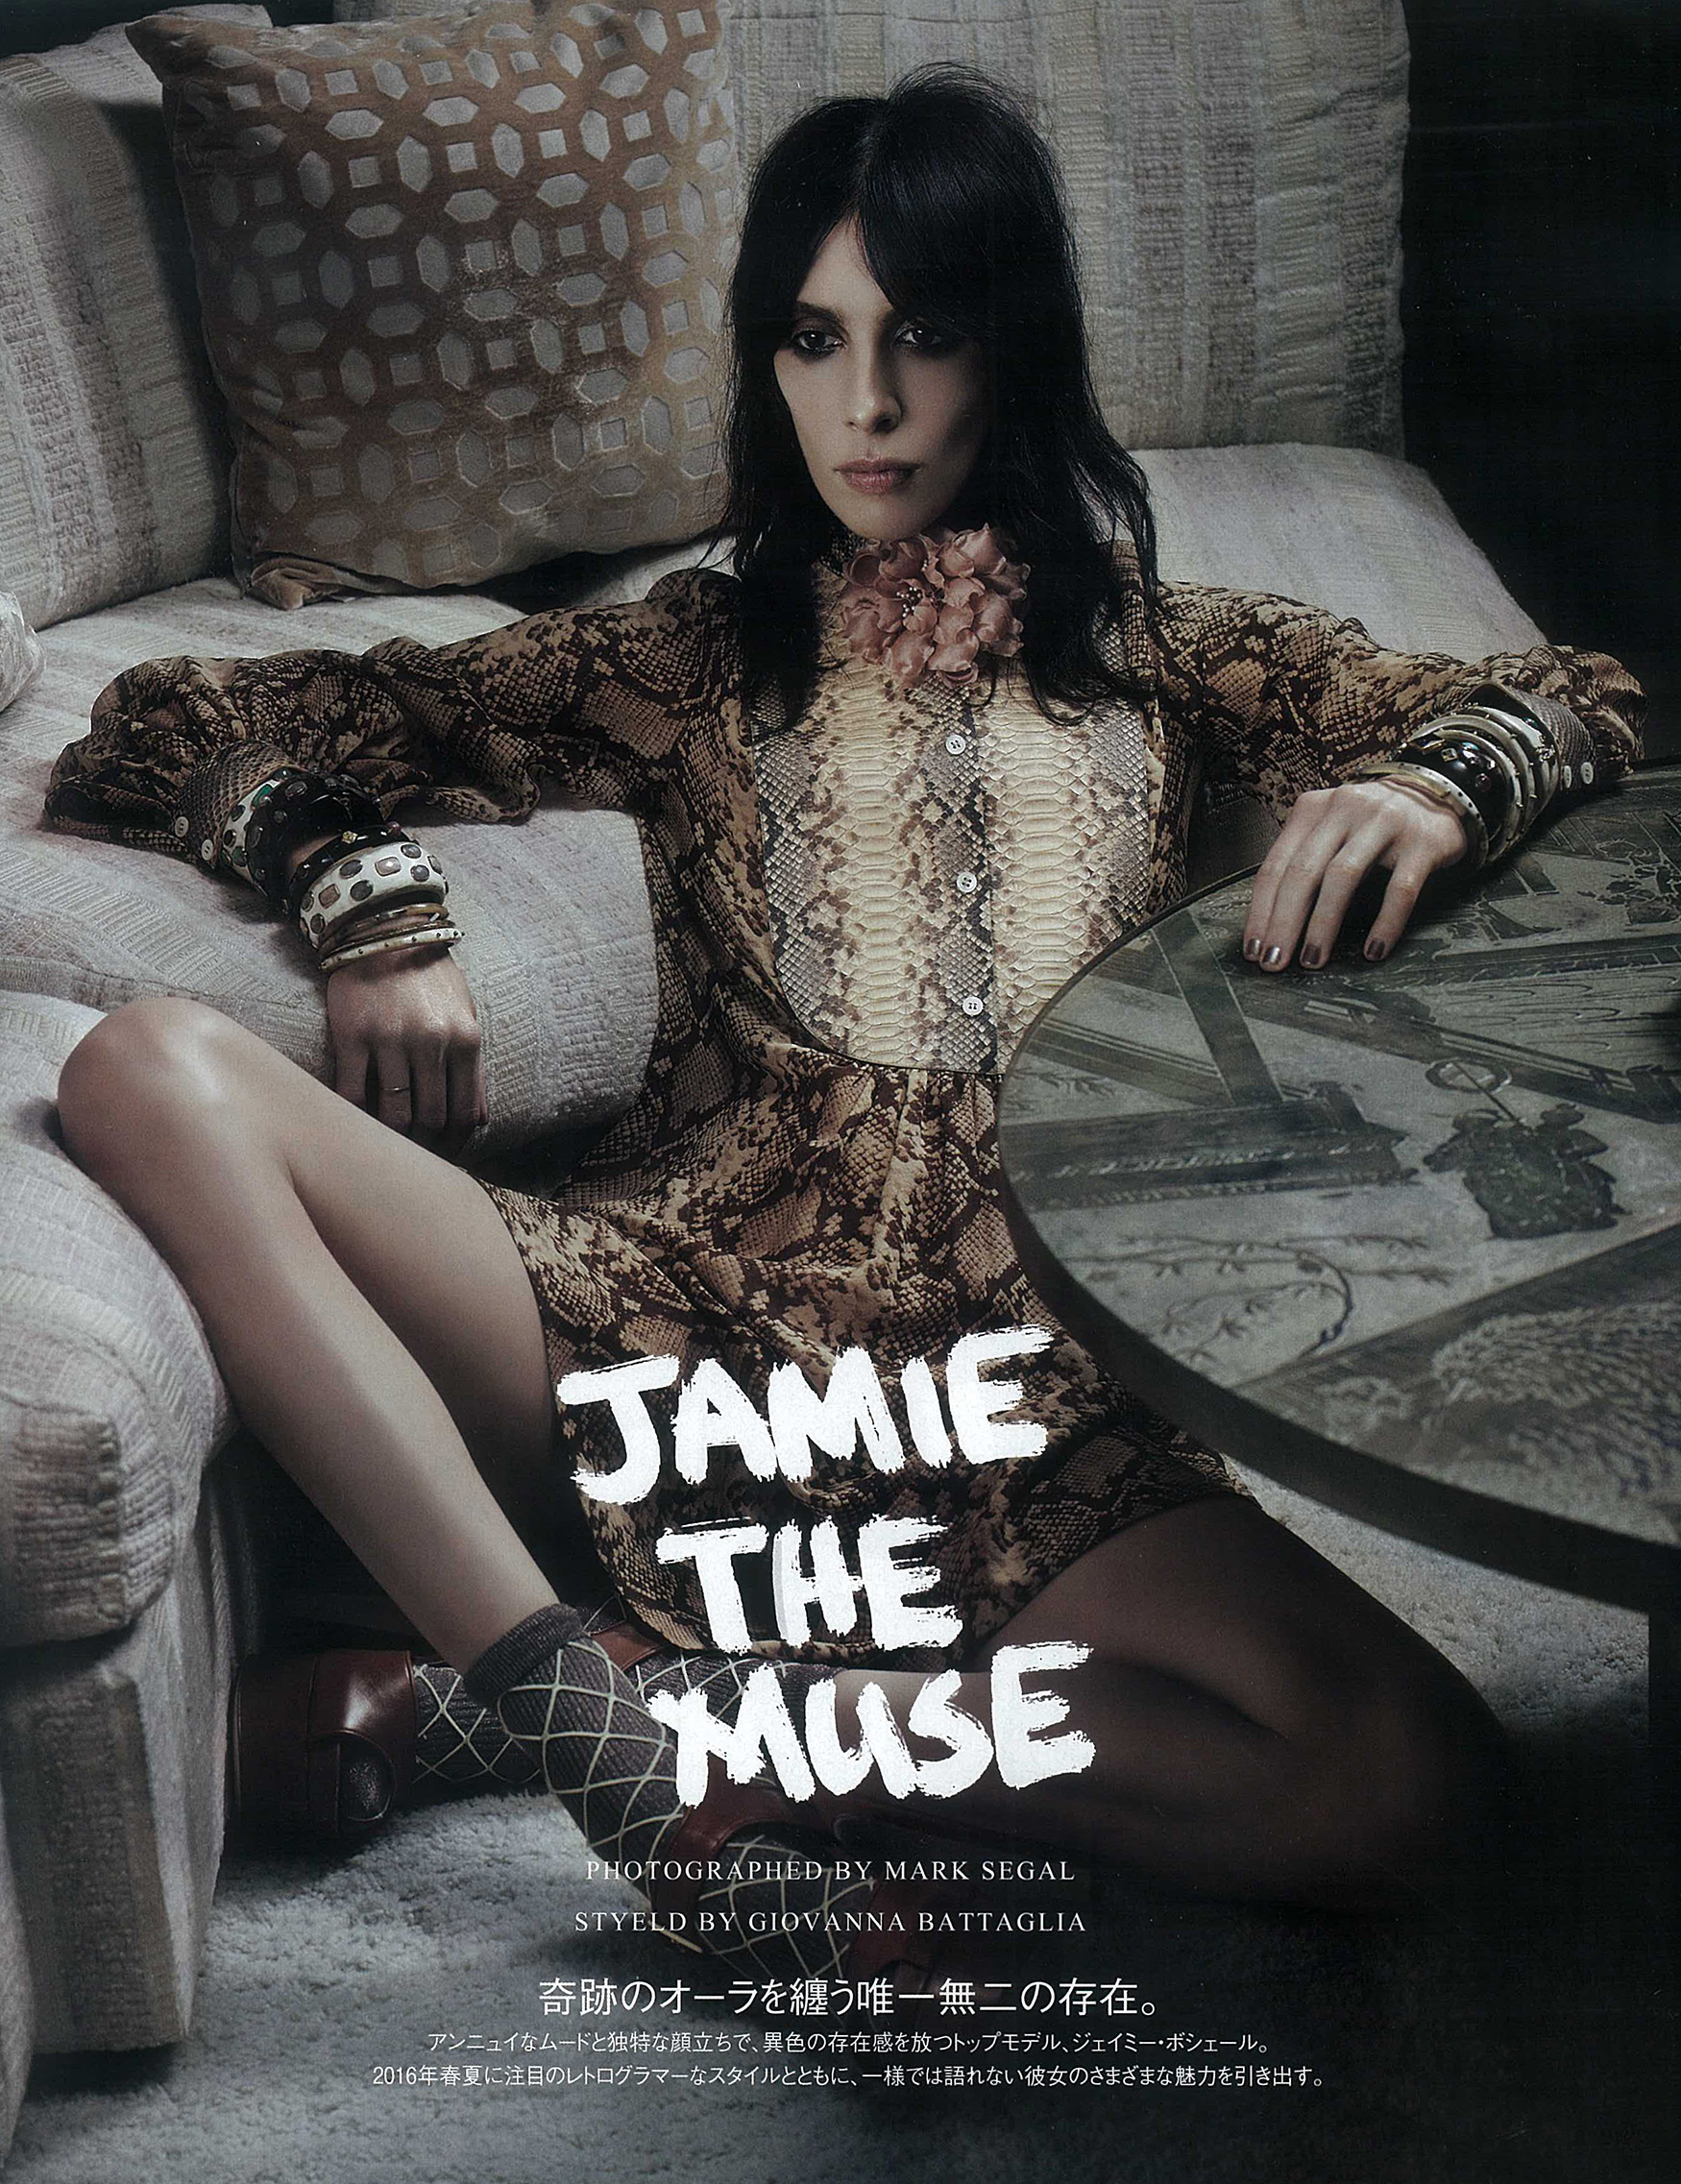 Giovanna-Battaglia-Vogue-Japan-Jamie-the-Muse-0.jpg